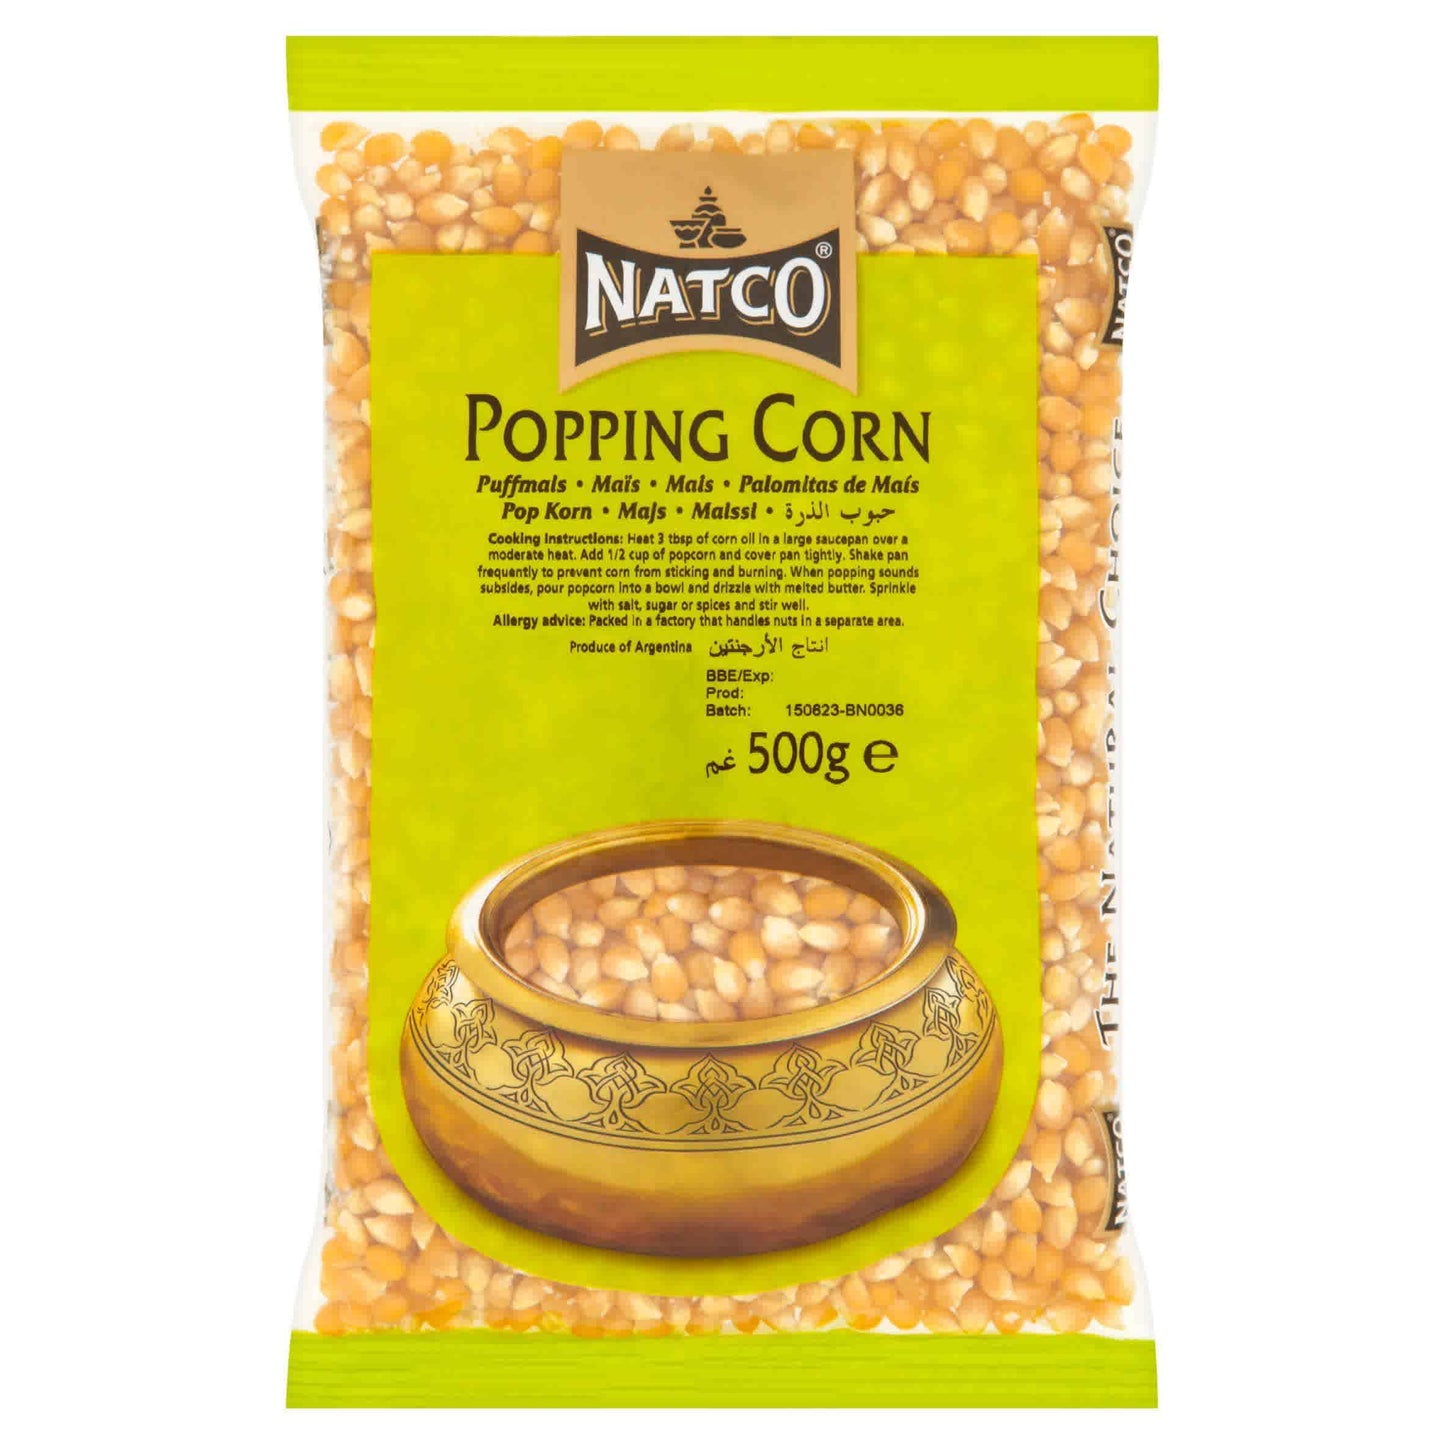 Natco Popping Corn 500g